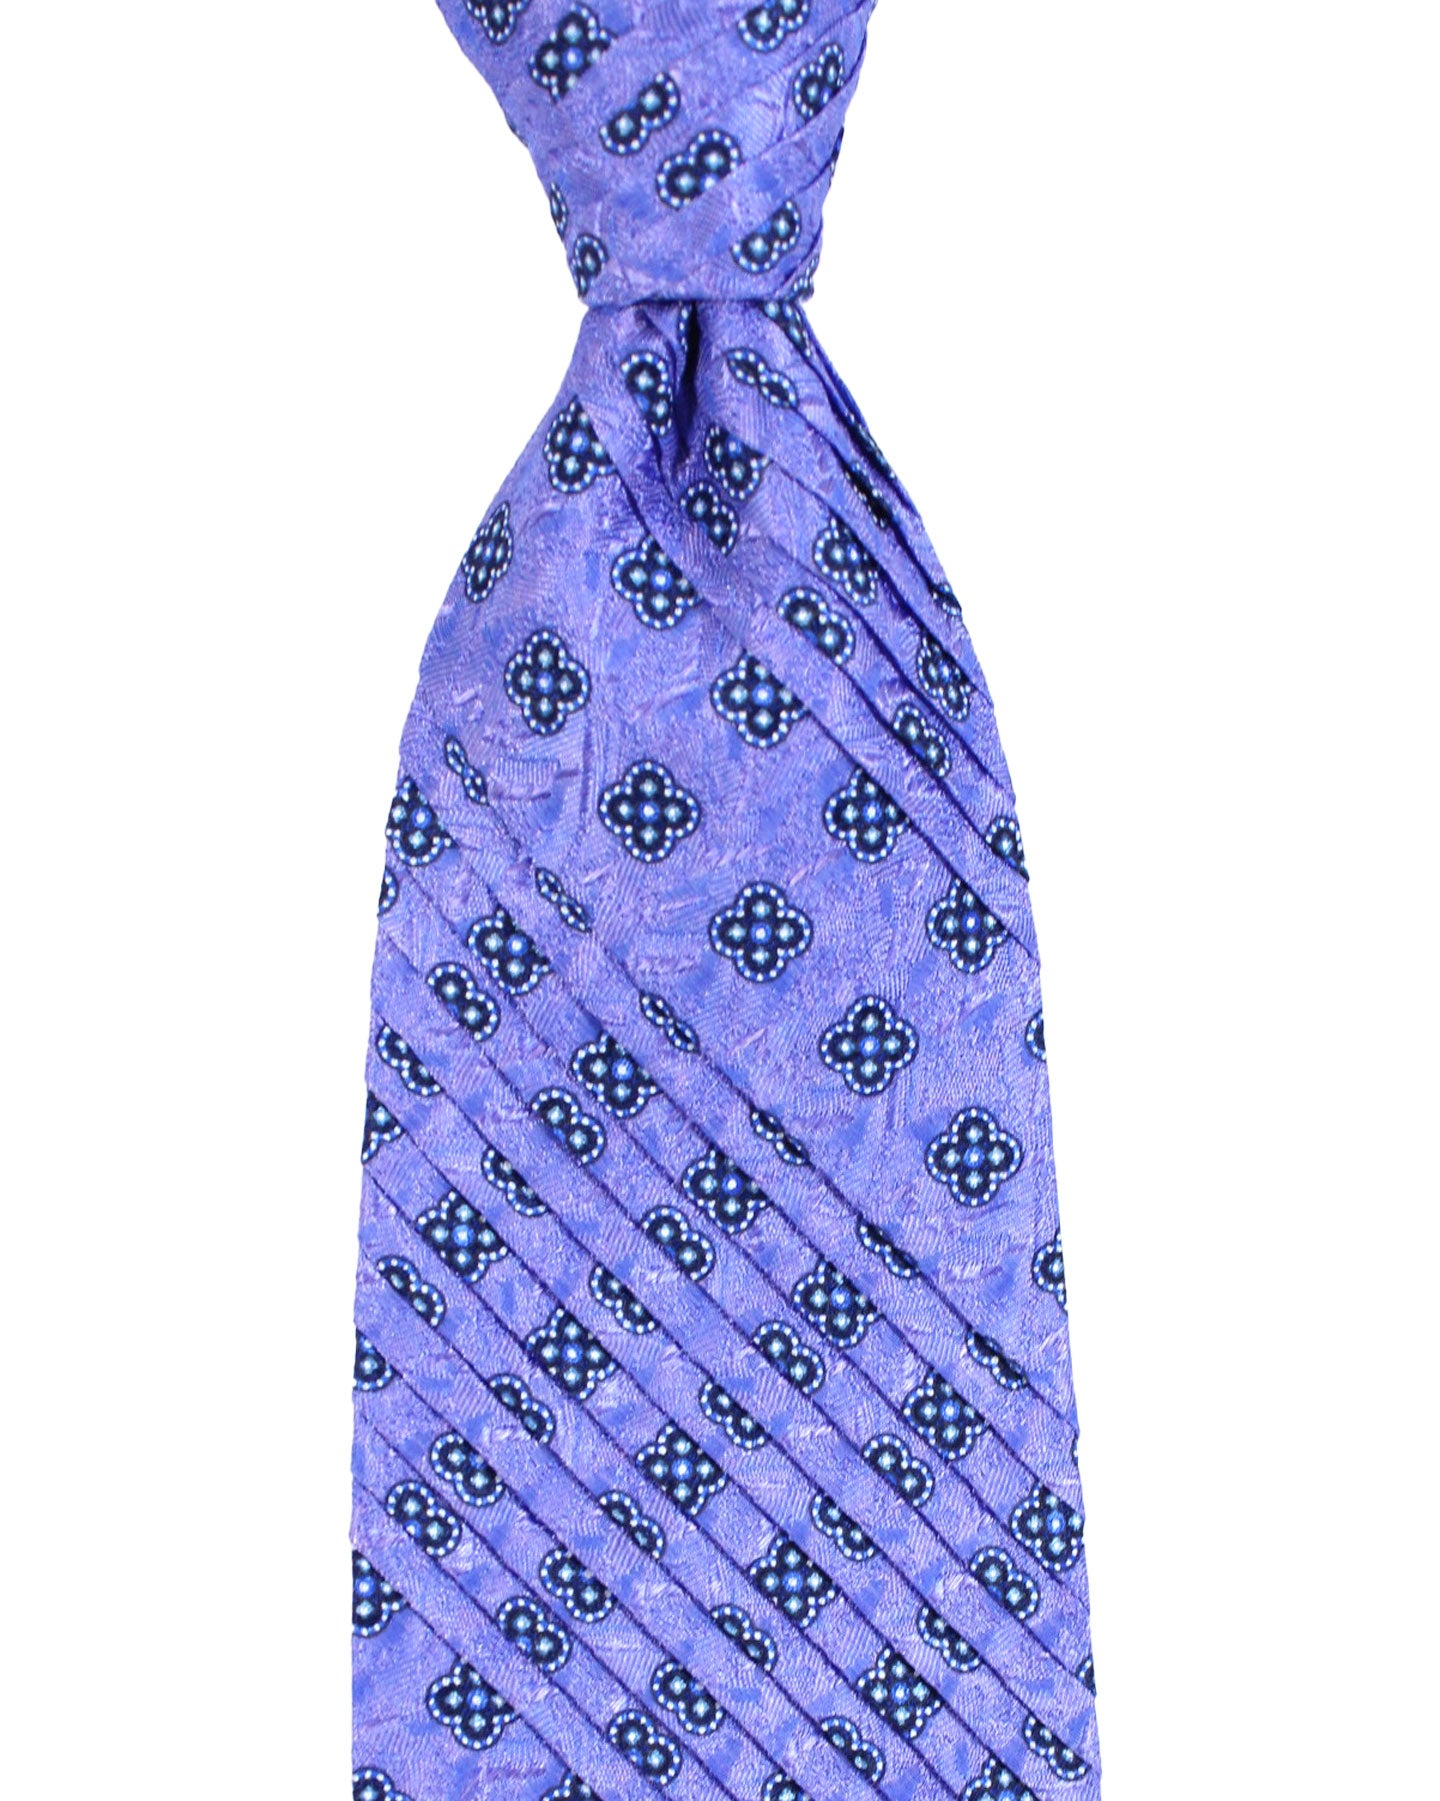 Stefano Ricci Tie Purple Geometric - Pleated Silk